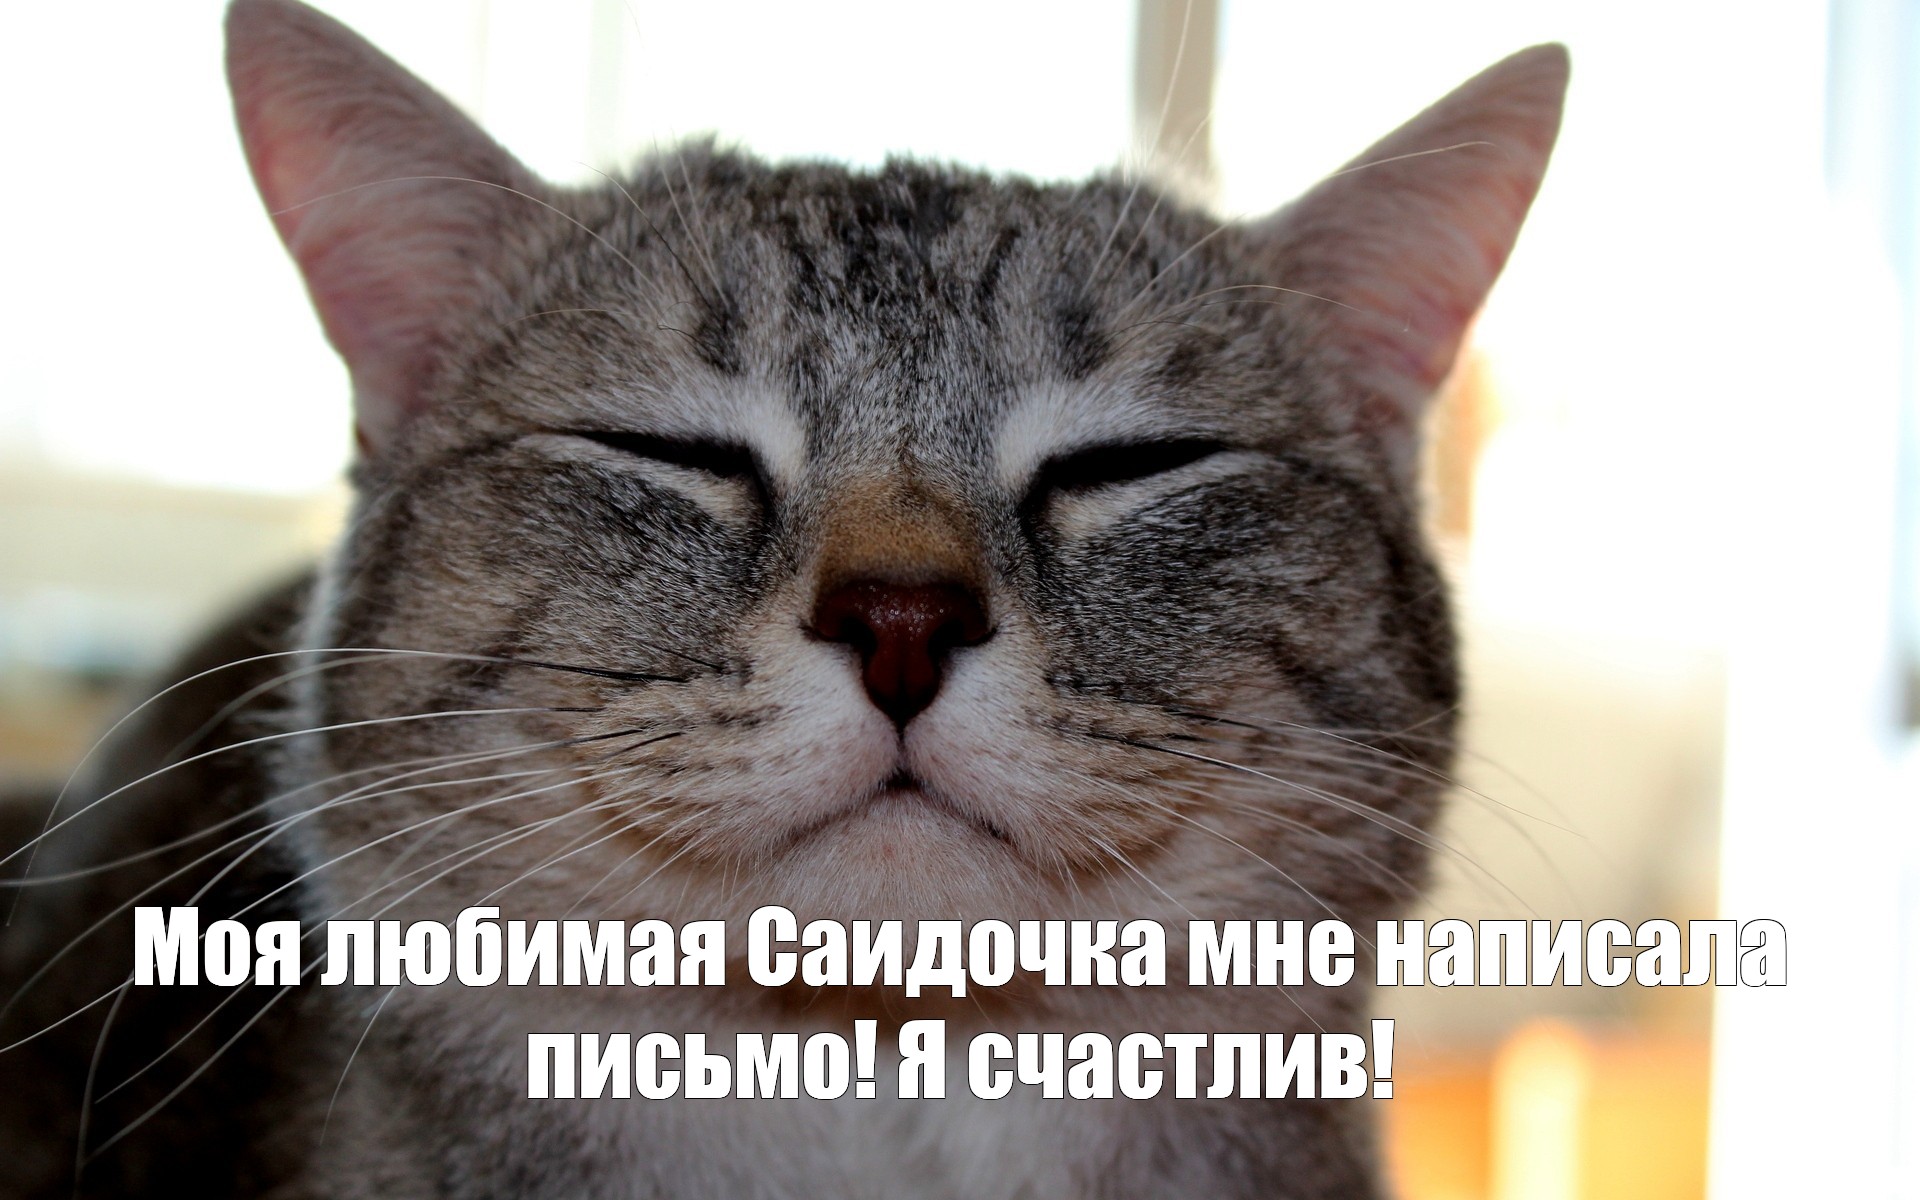 Cat Smiley Face Meme